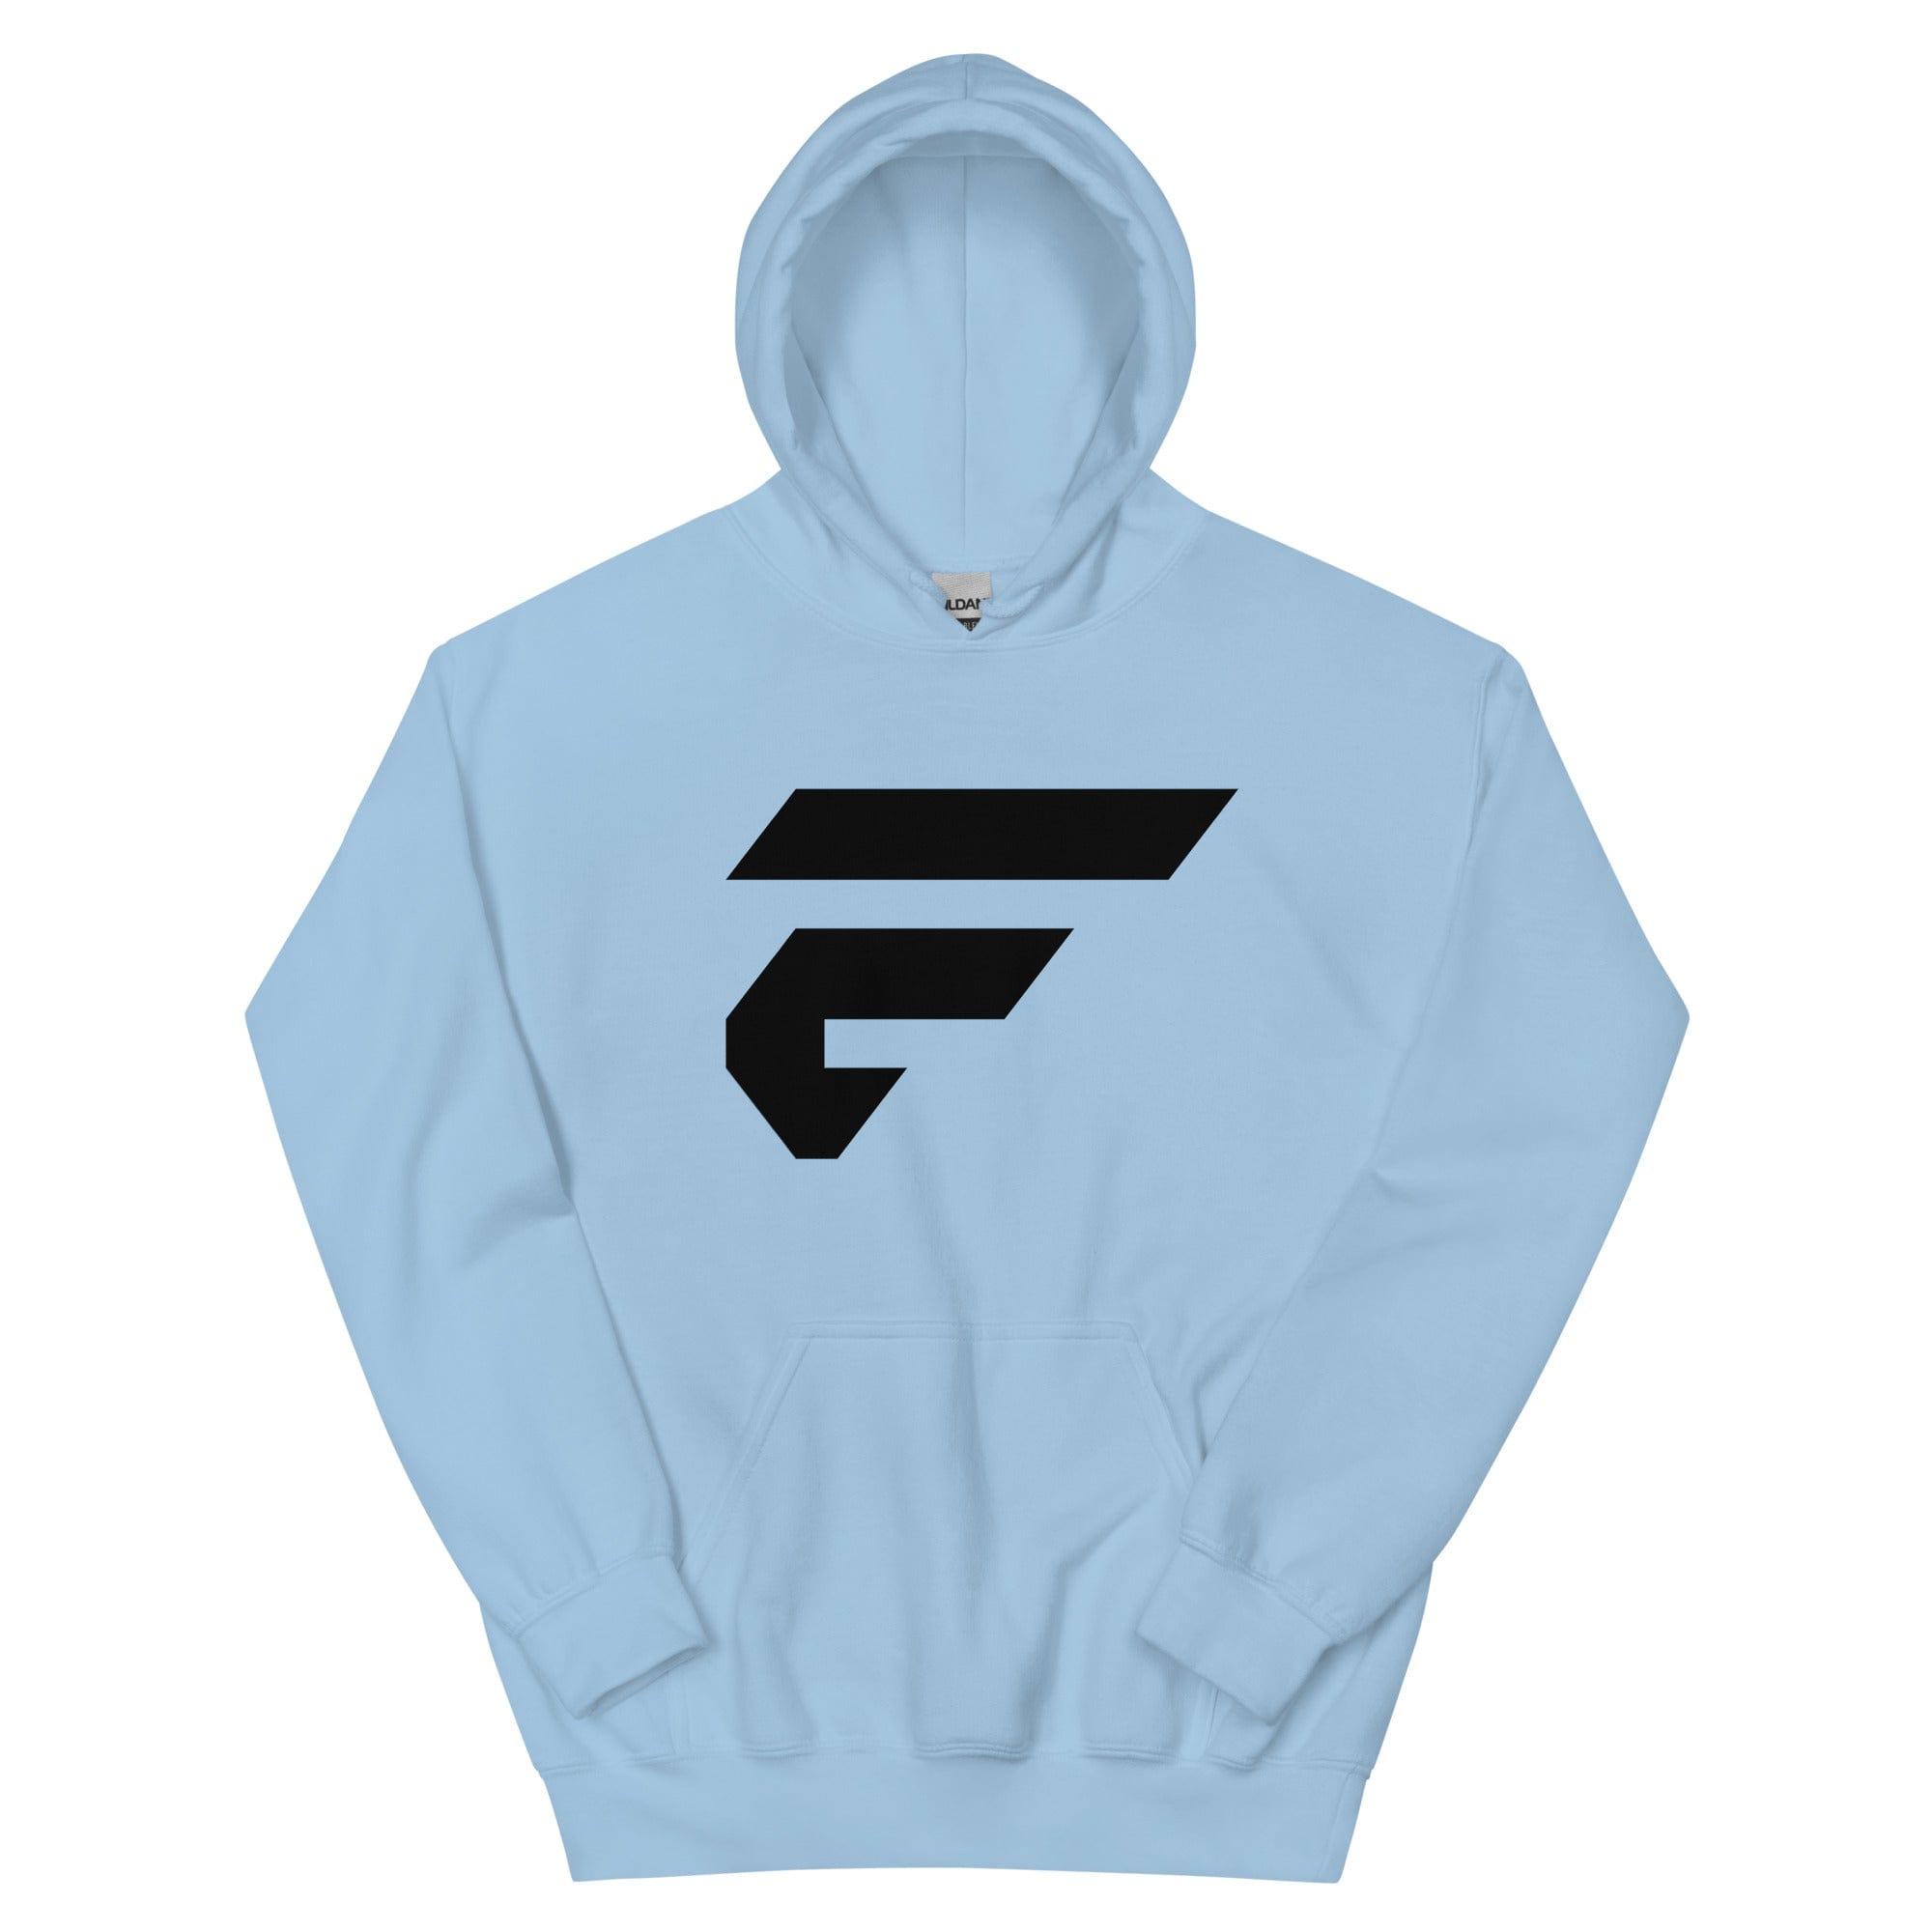 Light blue unisex cotton hoodie with Fire Cornhole F logo in black